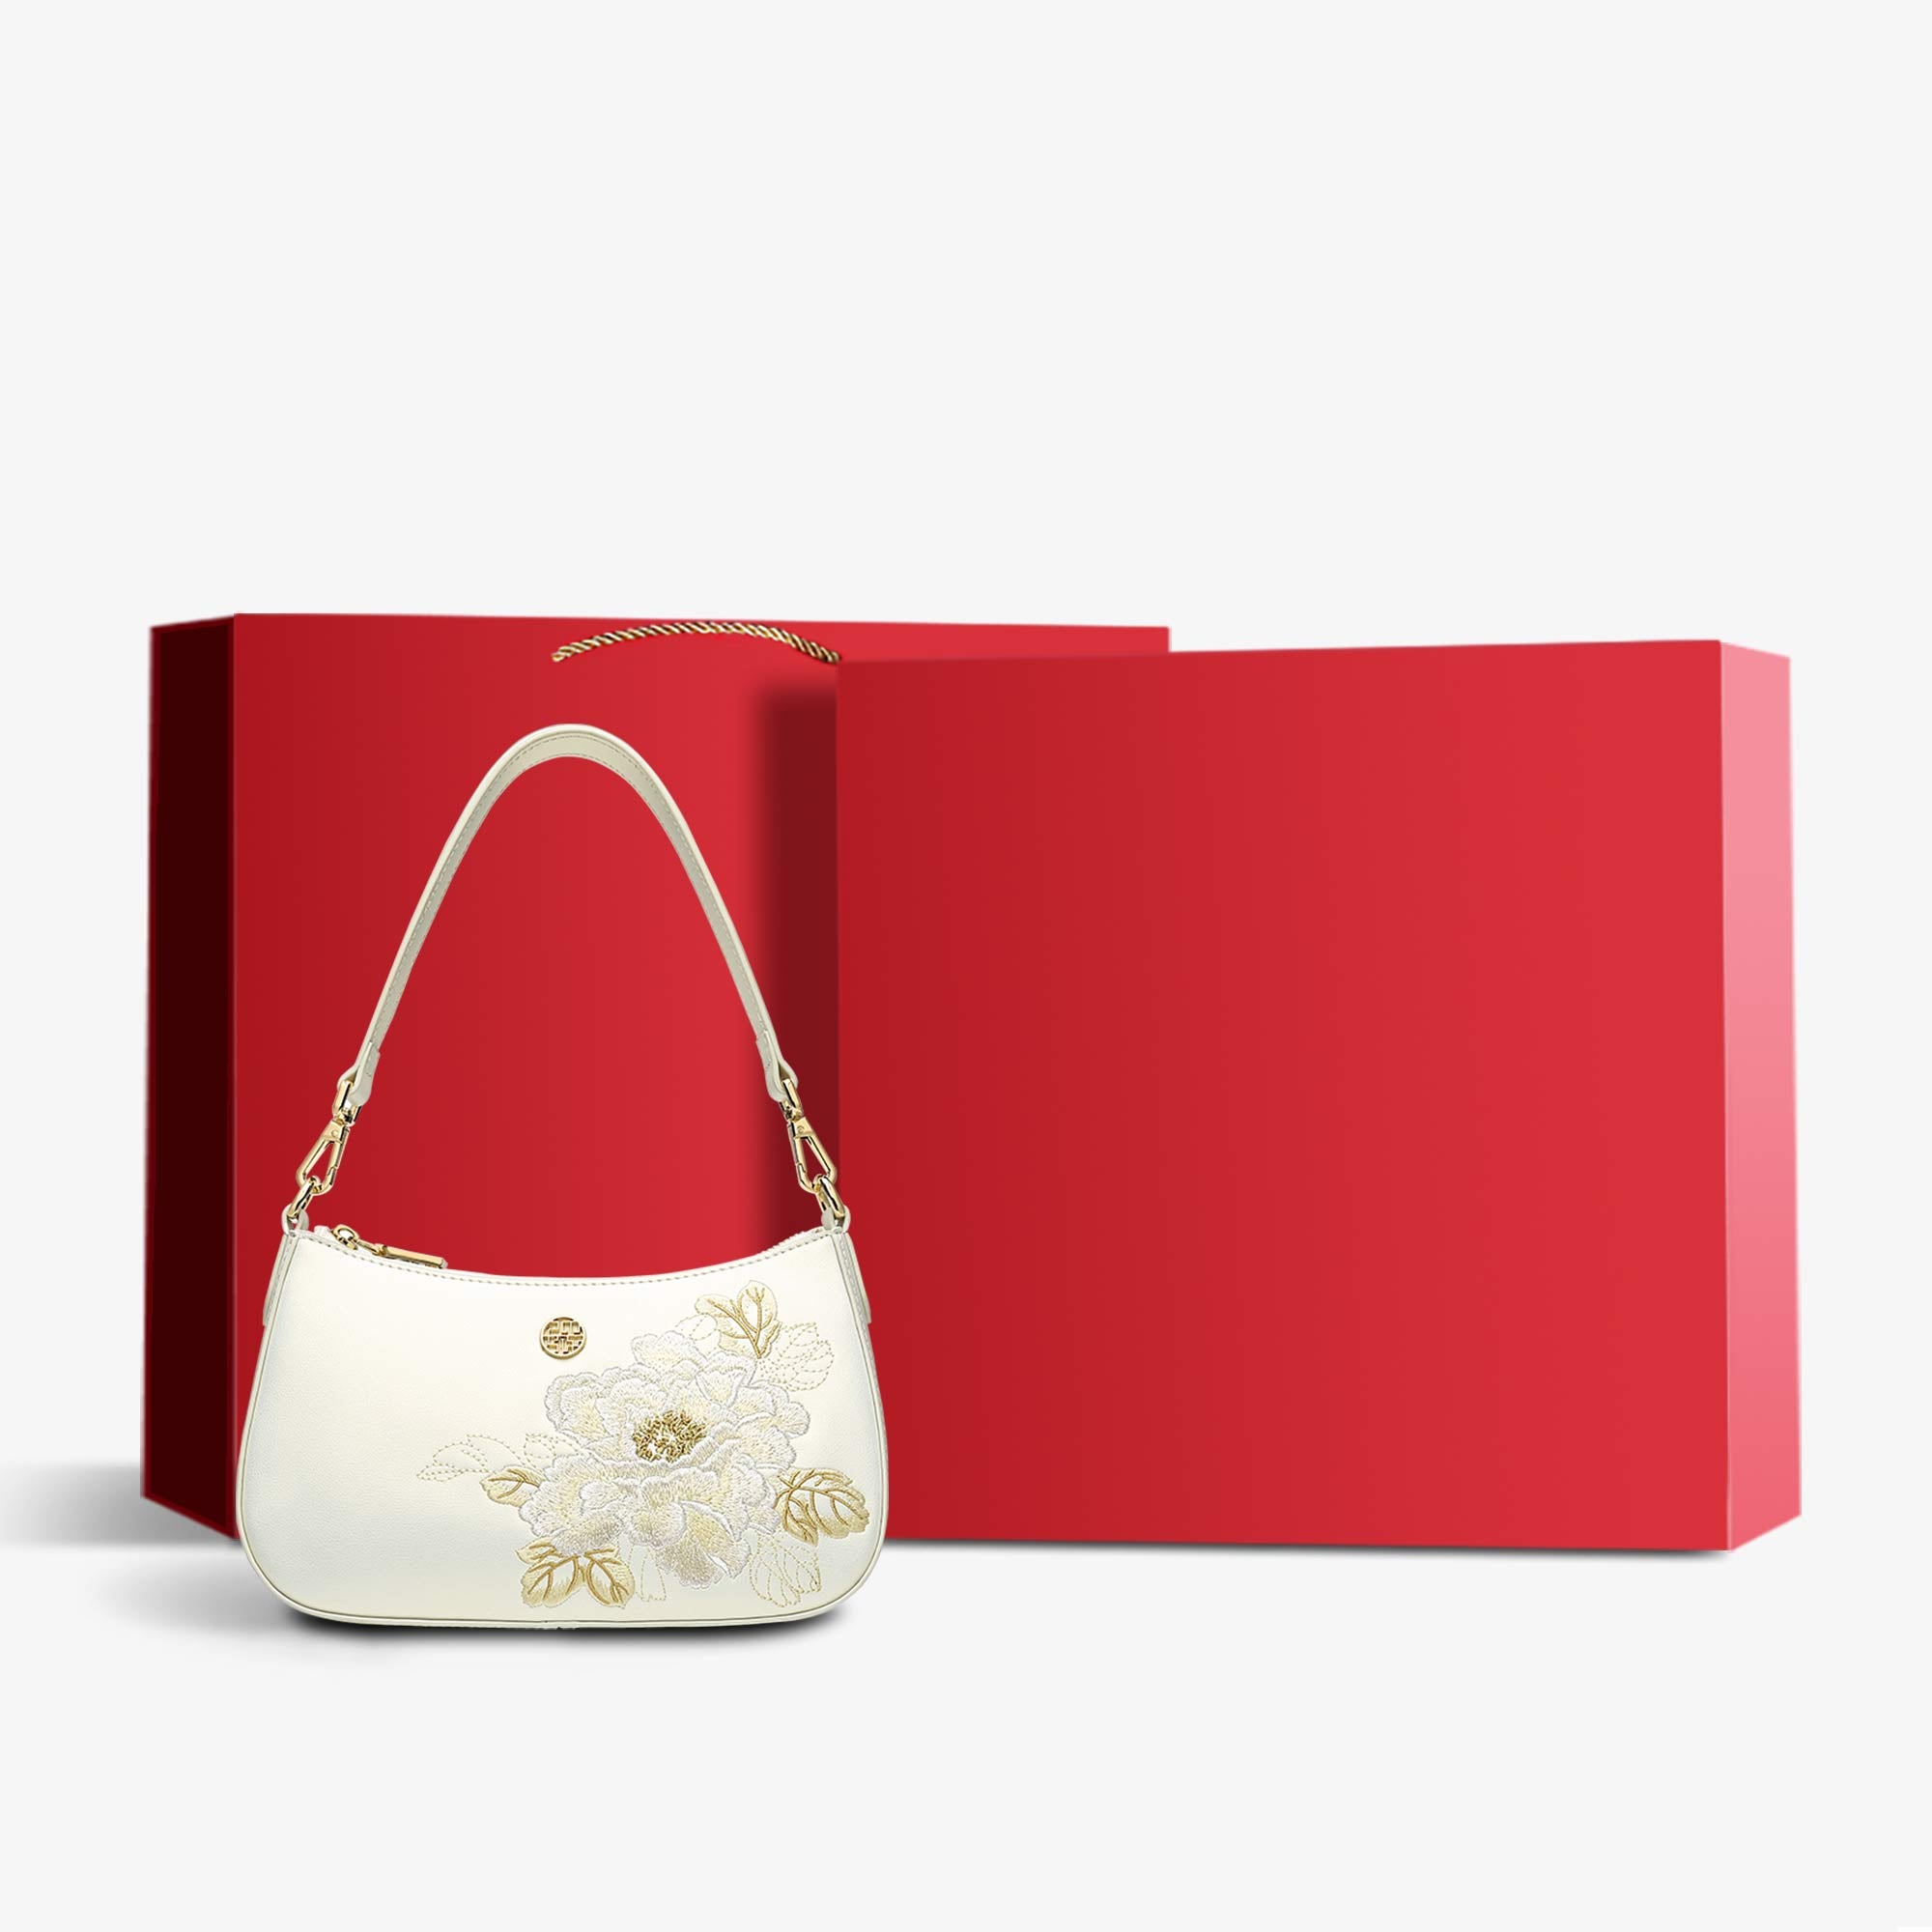 Embroidery Leather Peony Women's Shoulder Handbag-Shoulder Bag-SinoCultural-White-Bag with Gift Box-P220212-2-g-SinoCultural